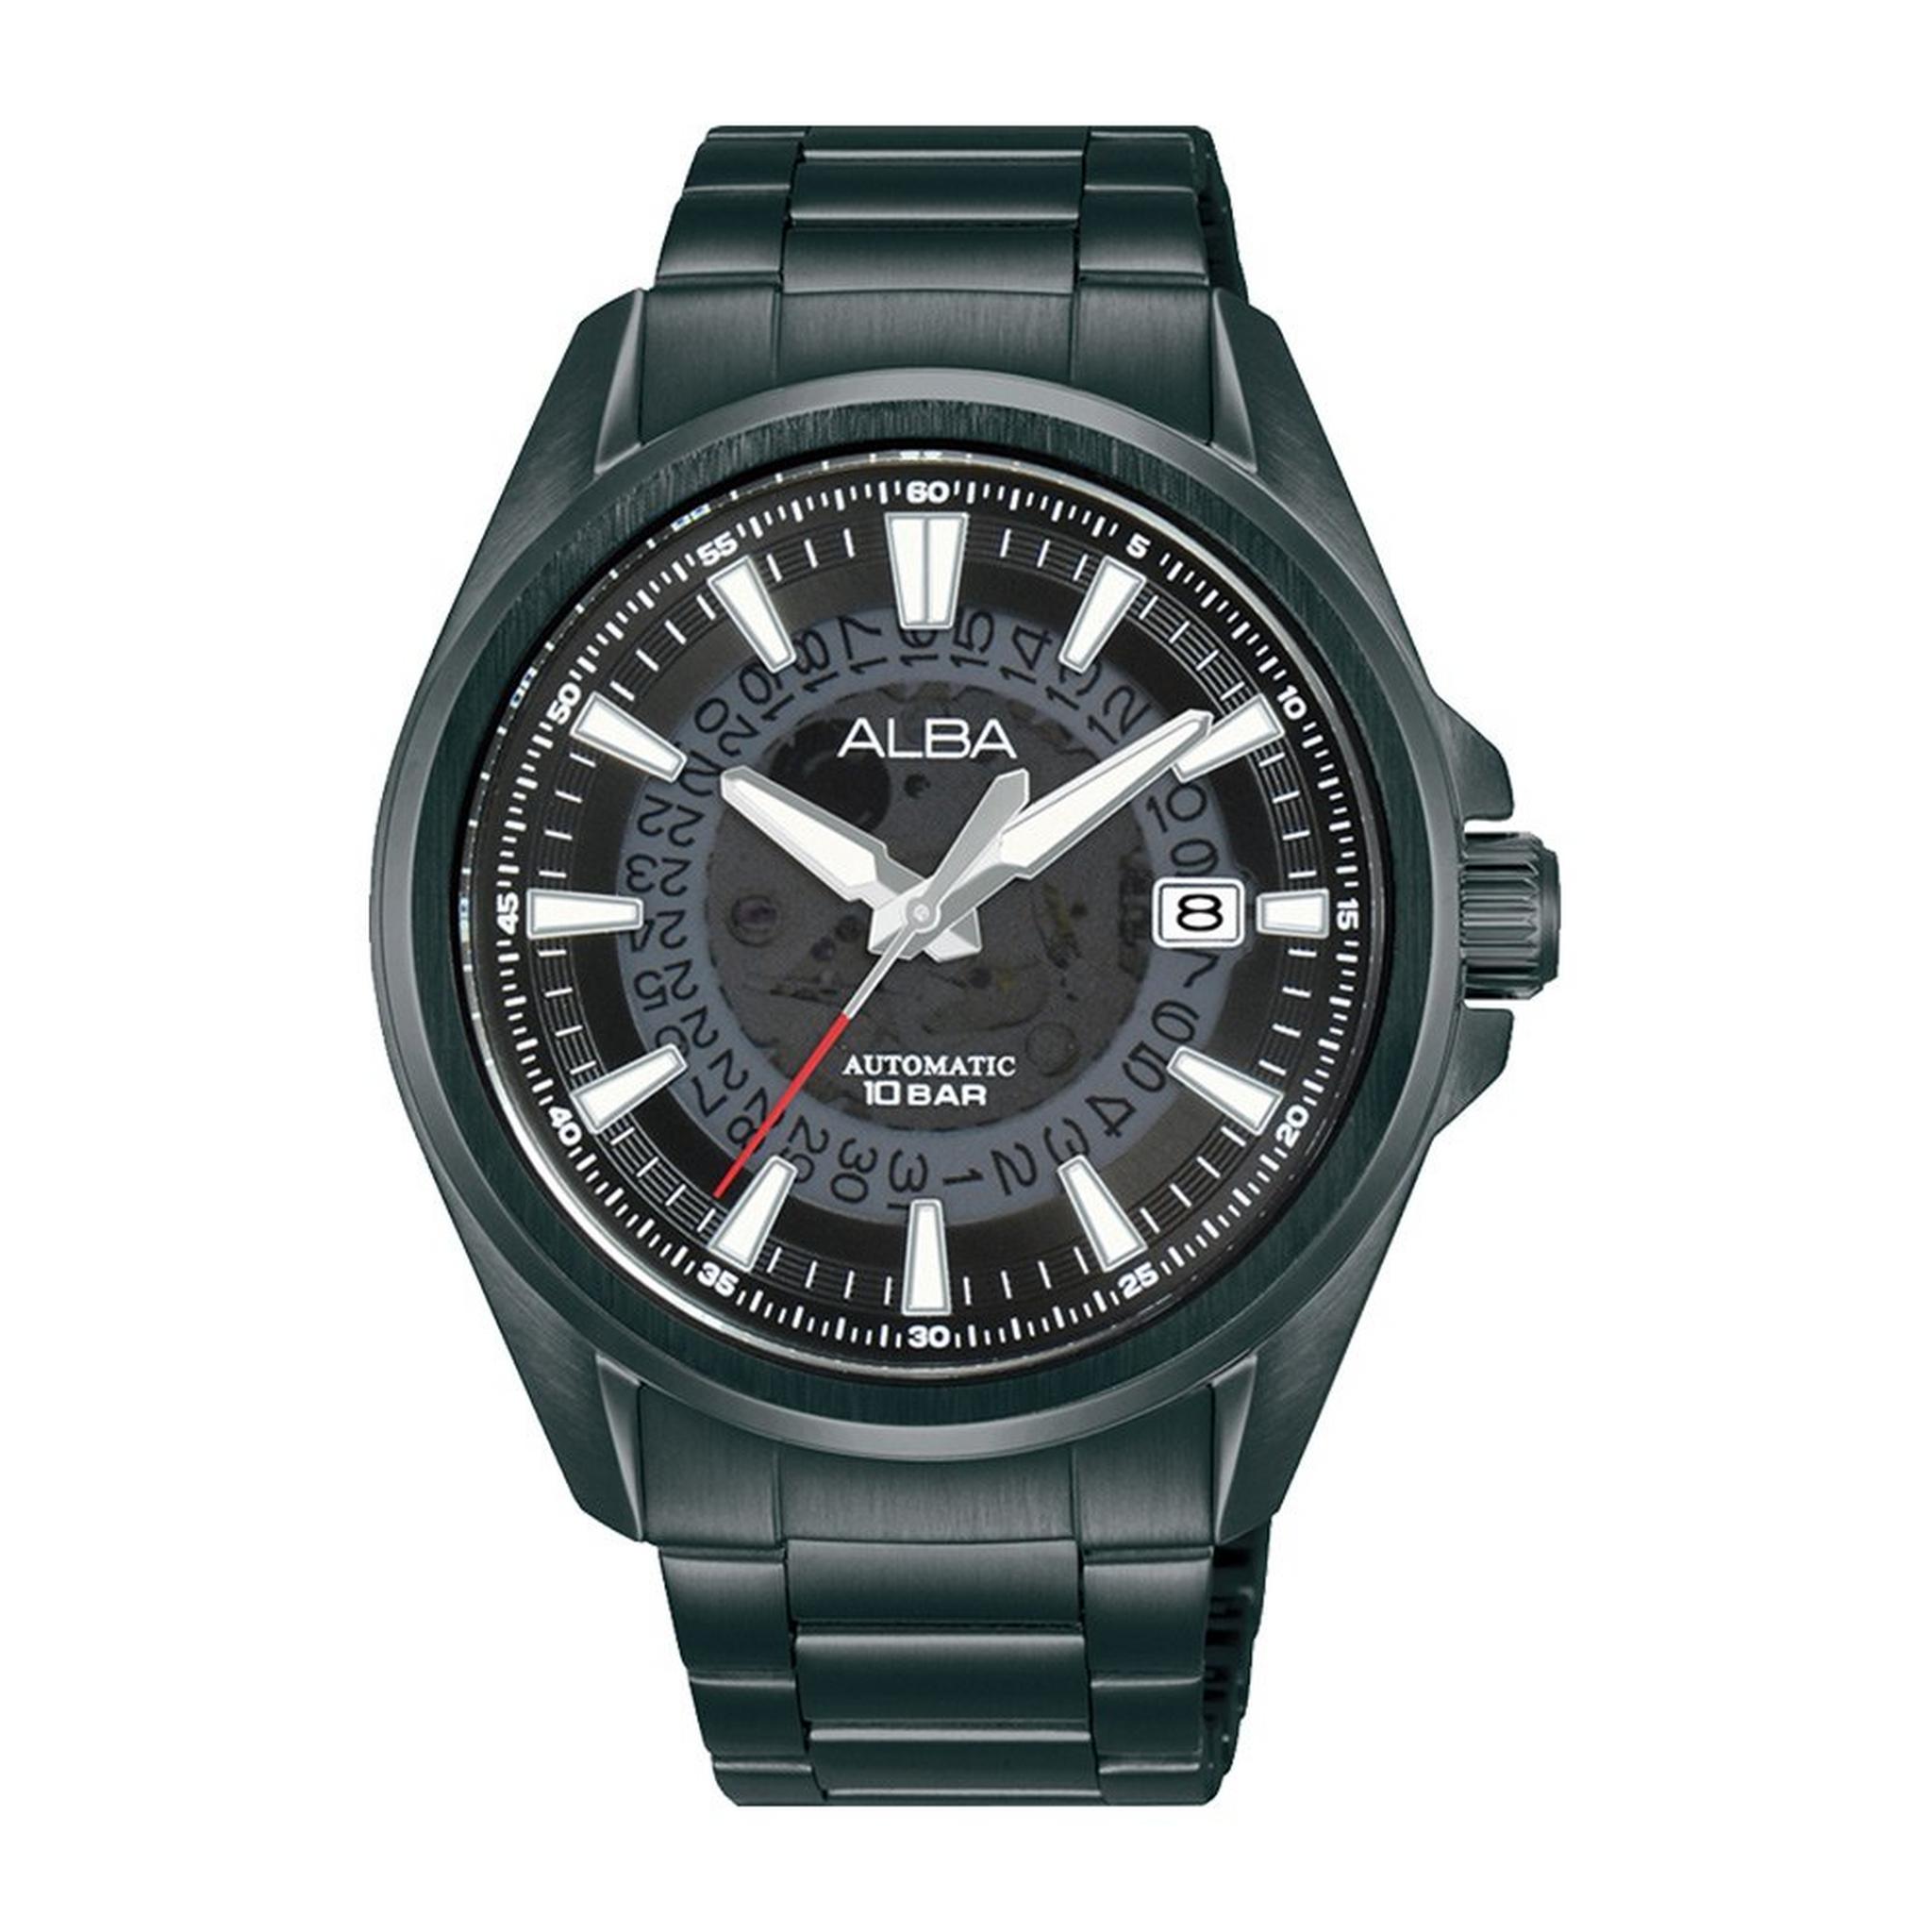 Alba Active Men's Watch,Analog, 43mm, Stainless Steel Strap, AU4025X1 - Black